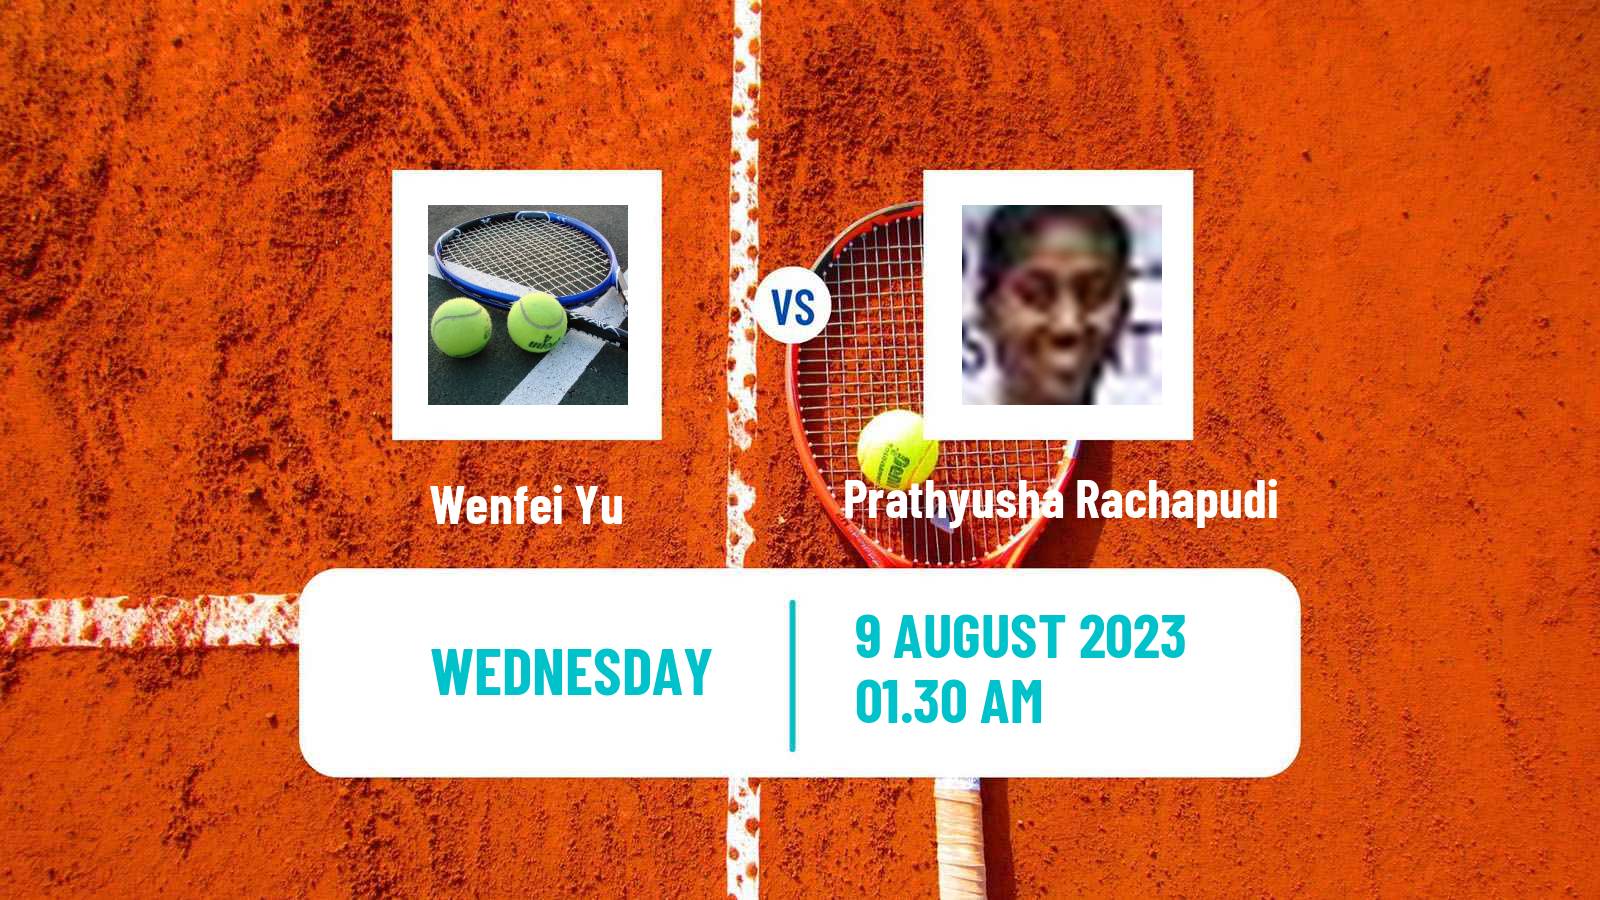 Tennis ITF W15 Ust Kamenogorsk Women Wenfei Yu - Prathyusha Rachapudi